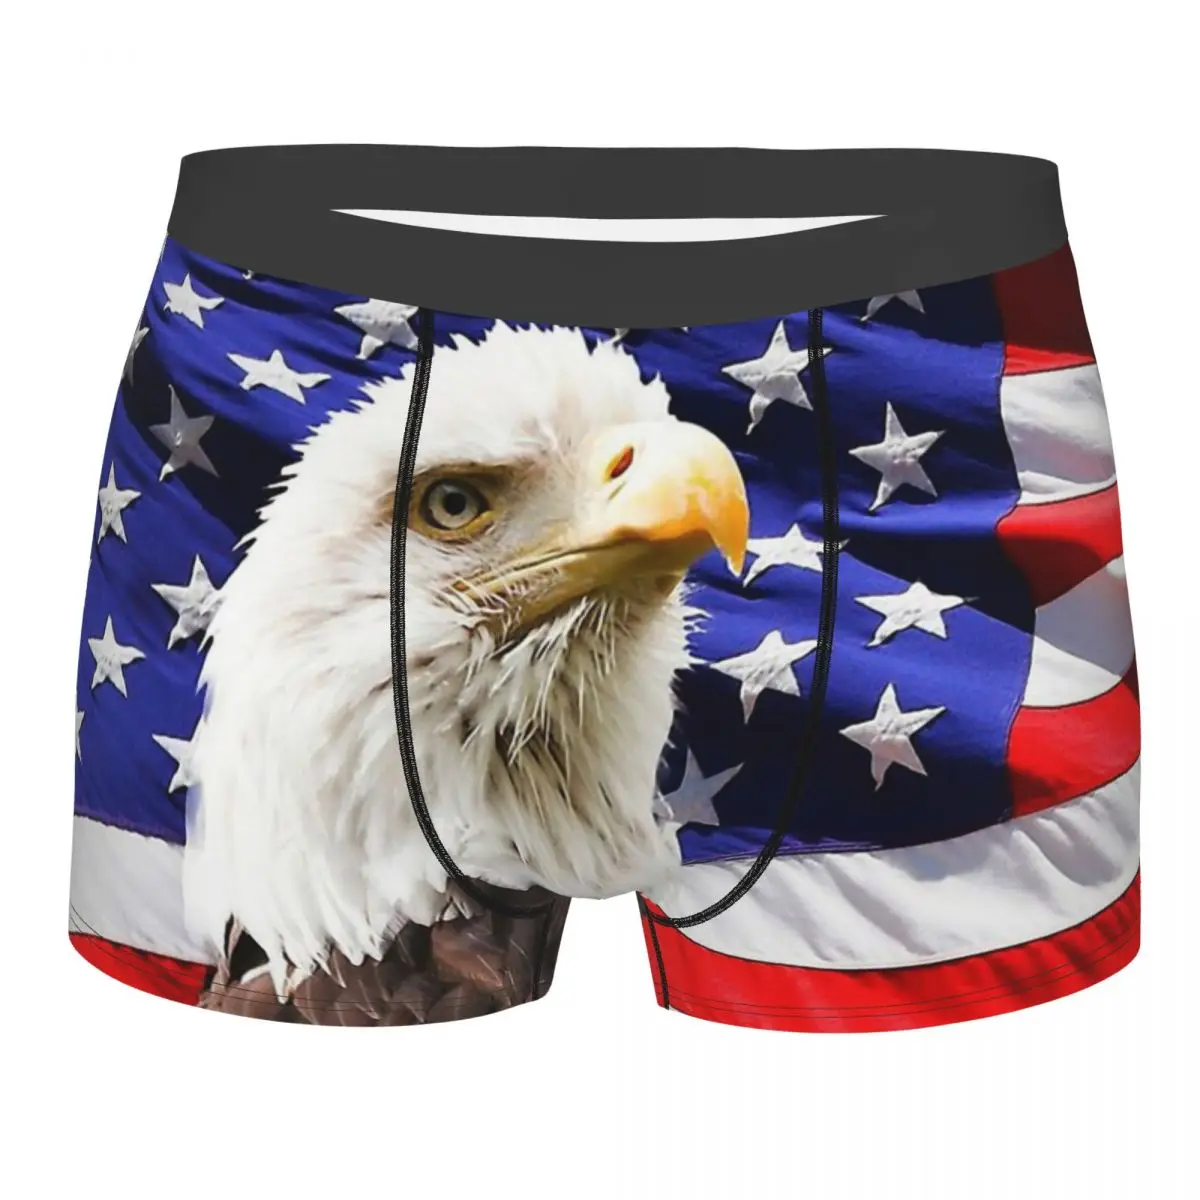 National Flag American Bald Eagle Underpants Cotton Panties Man Underwear Sexy Shorts Boxer Briefs